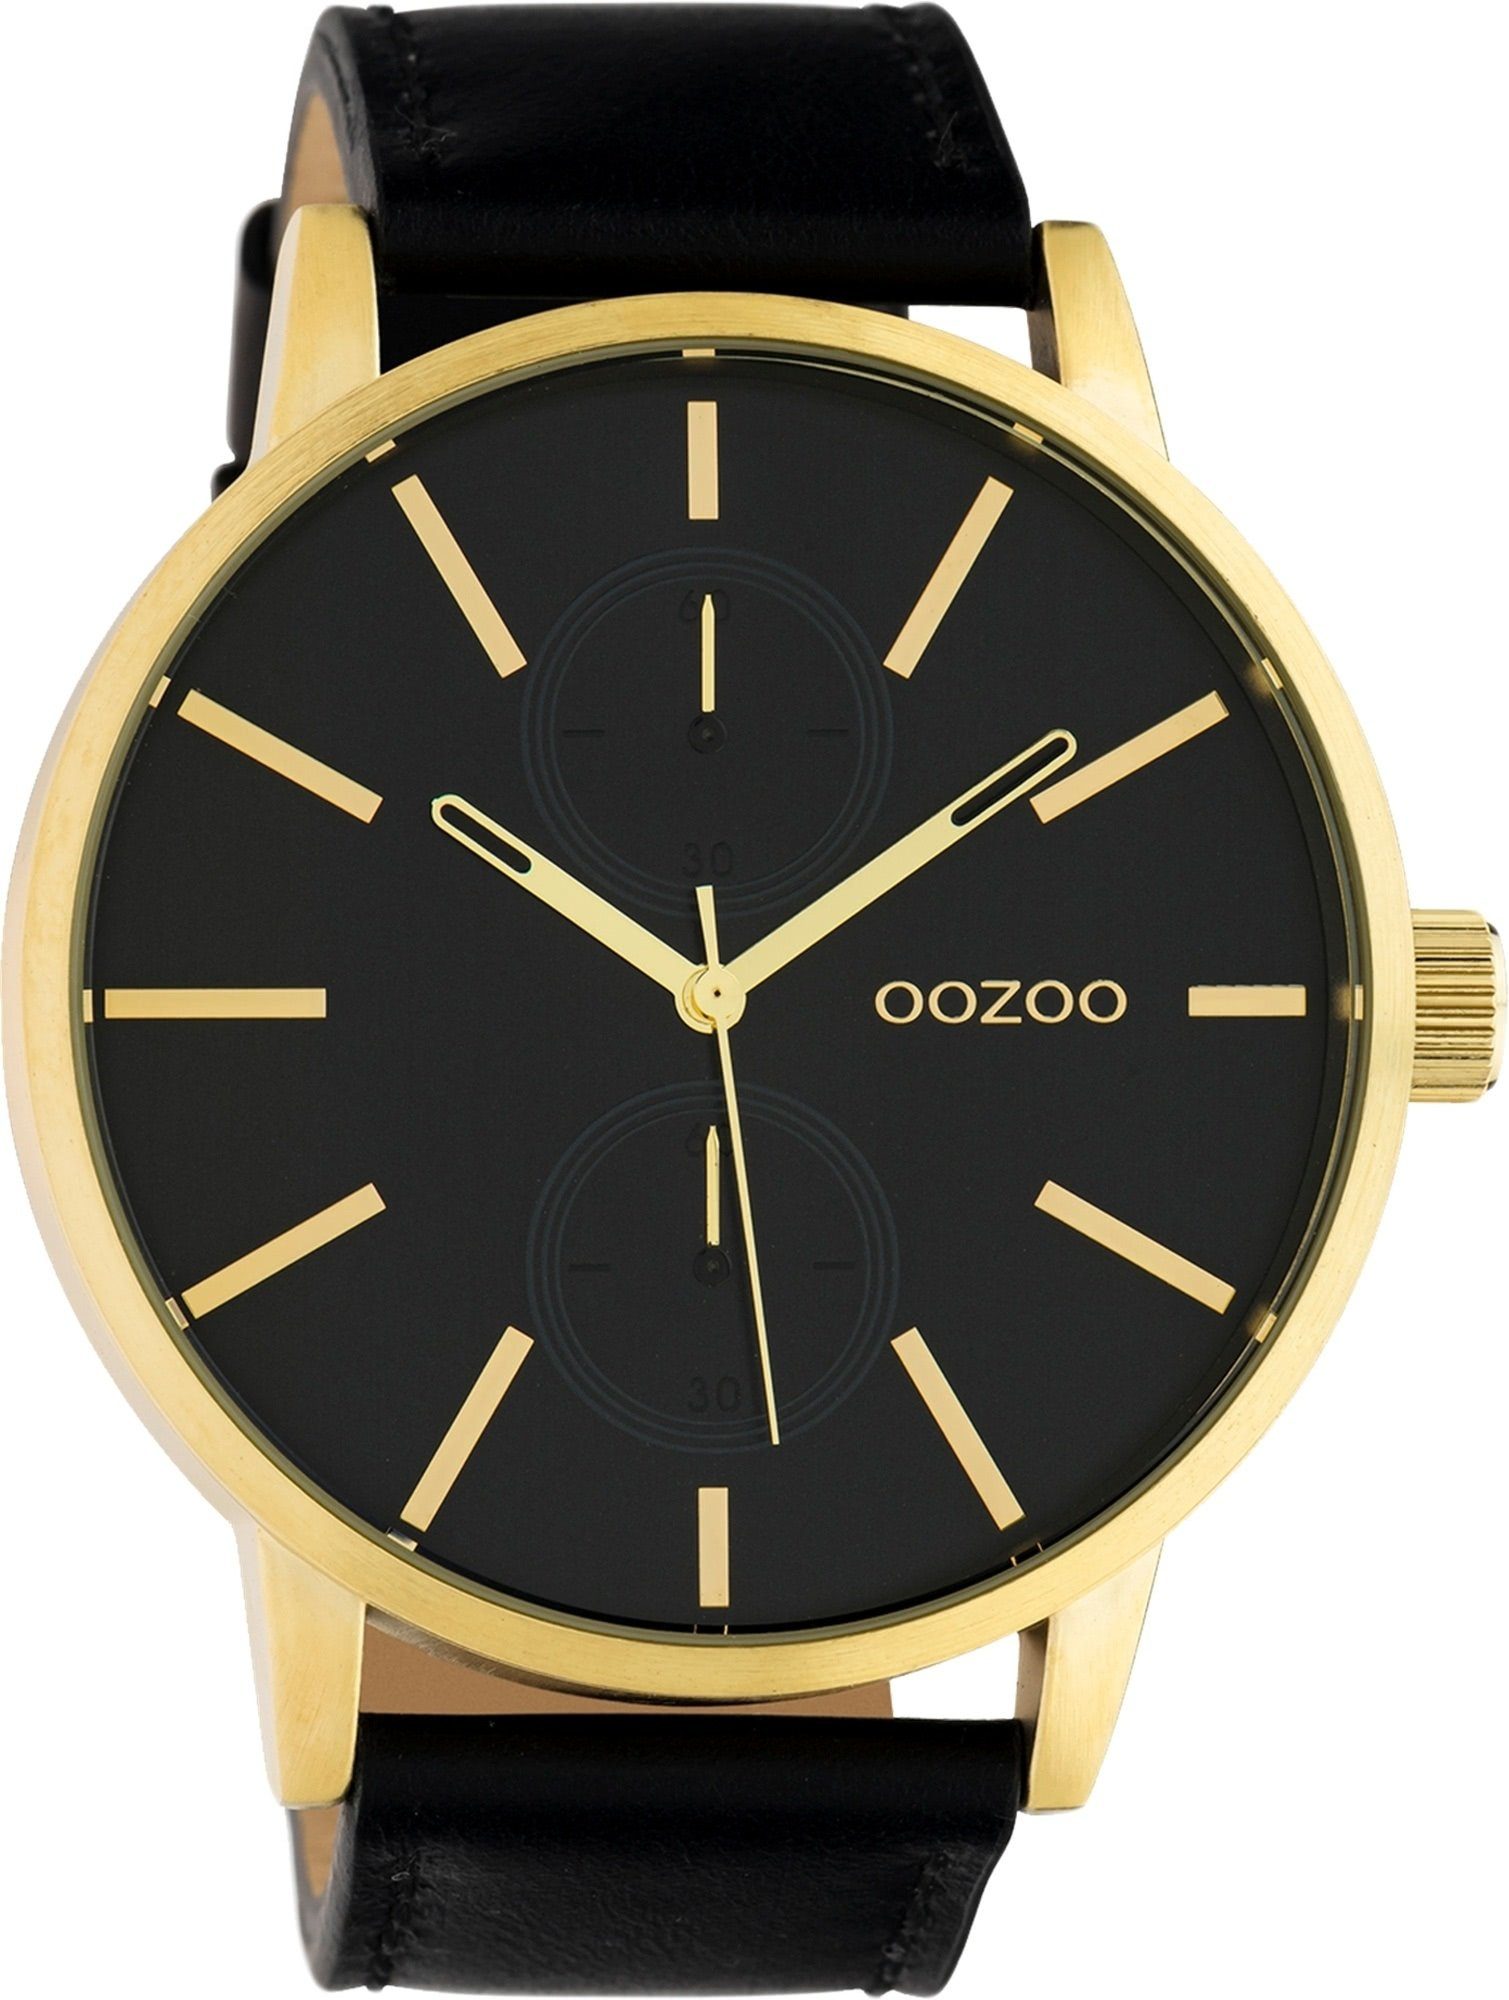 OOZOO Quarzuhr Oozoo Unisex Armbanduhr schwarz Analog, Damen, Herrenuhr rund, extra groß (ca 50mm) Lederarmband, FashionStyle